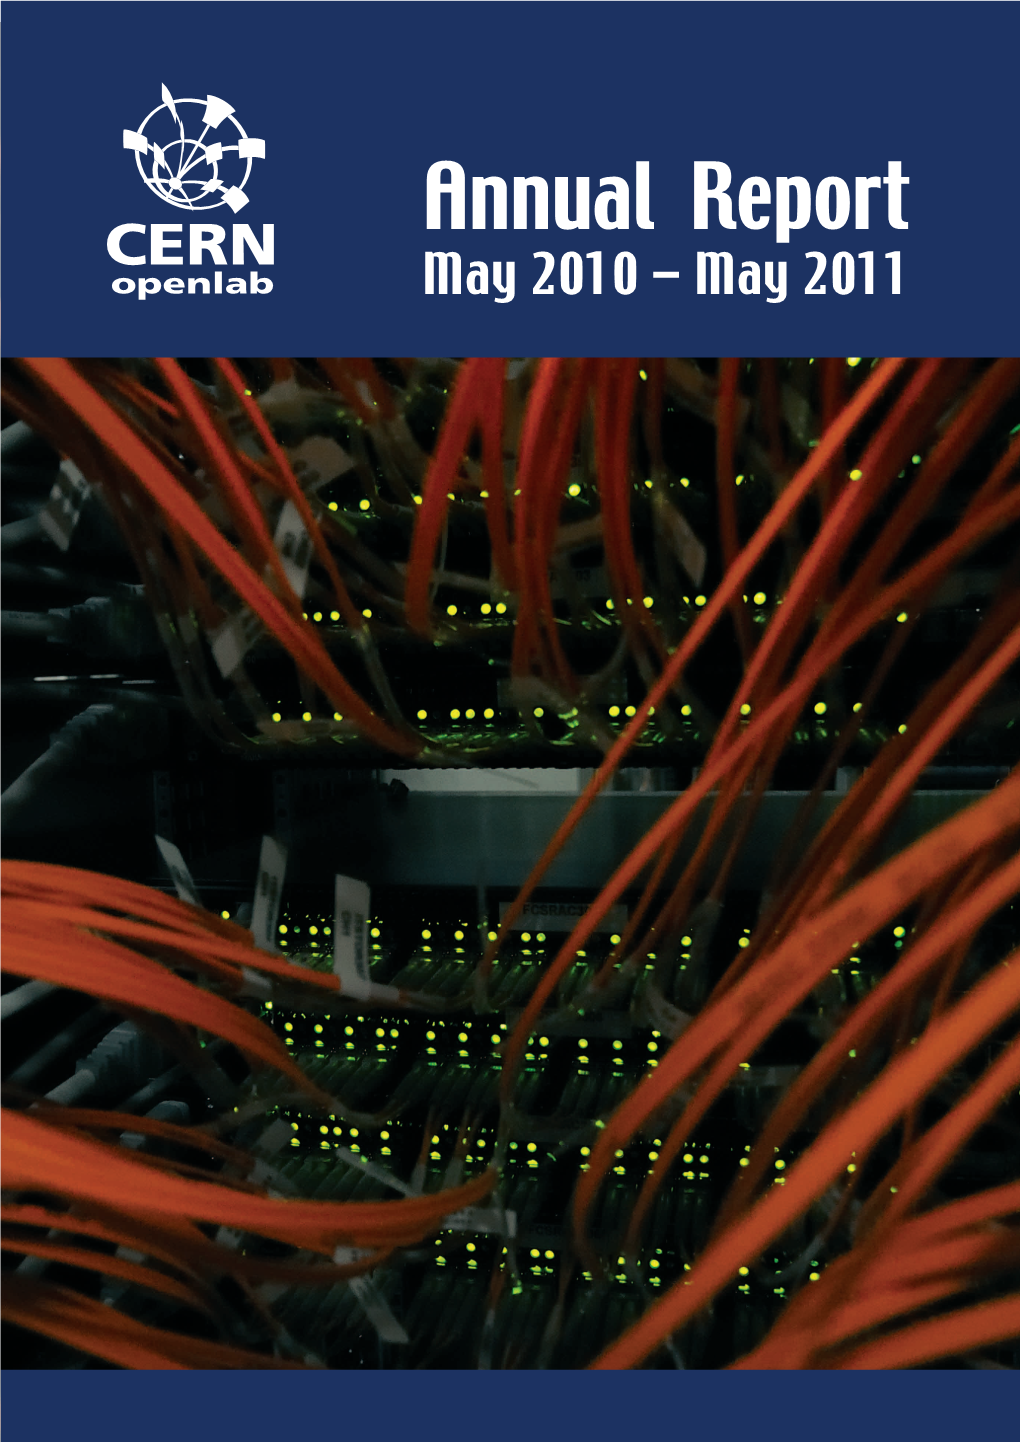 CERN Openlab Annual Report 2011